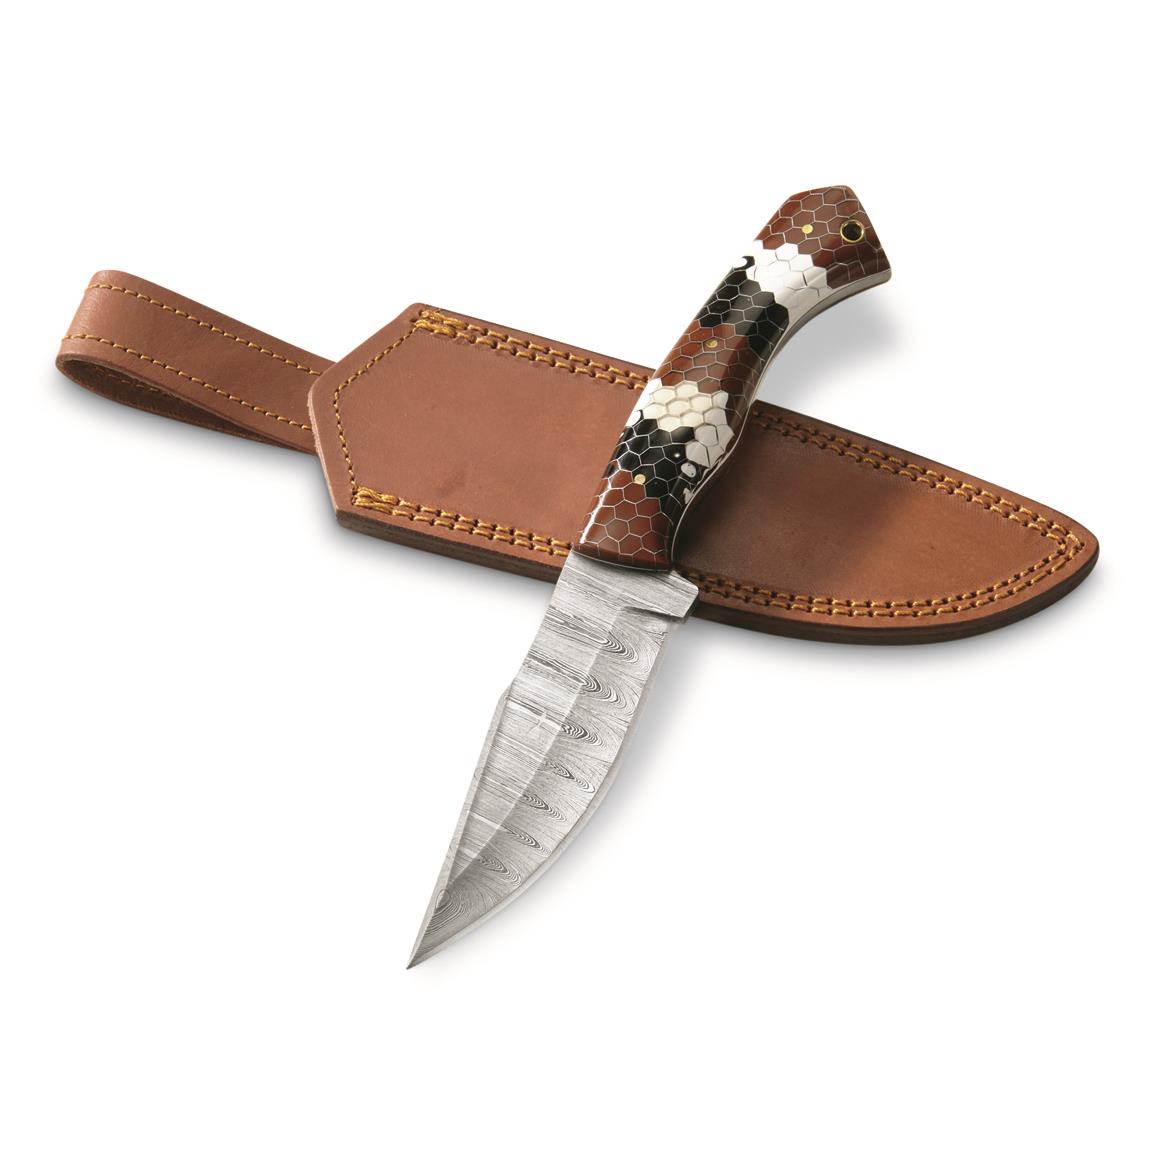 SZCO Texas Rattler Damascus Fixed Blade Knife